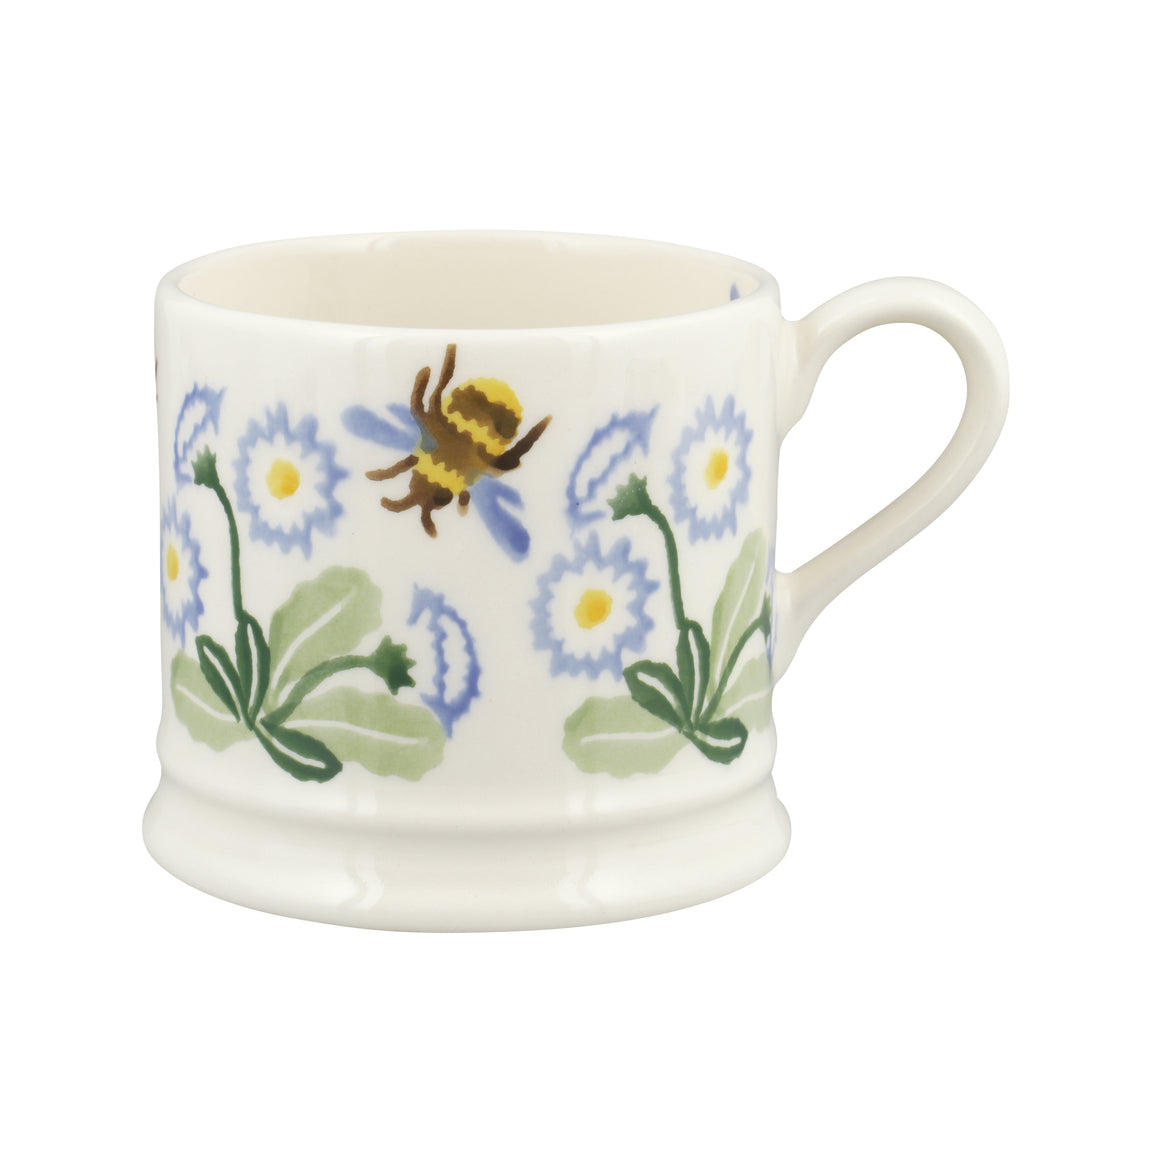 Emma Bridgewater Daisy & Bee Small Mug